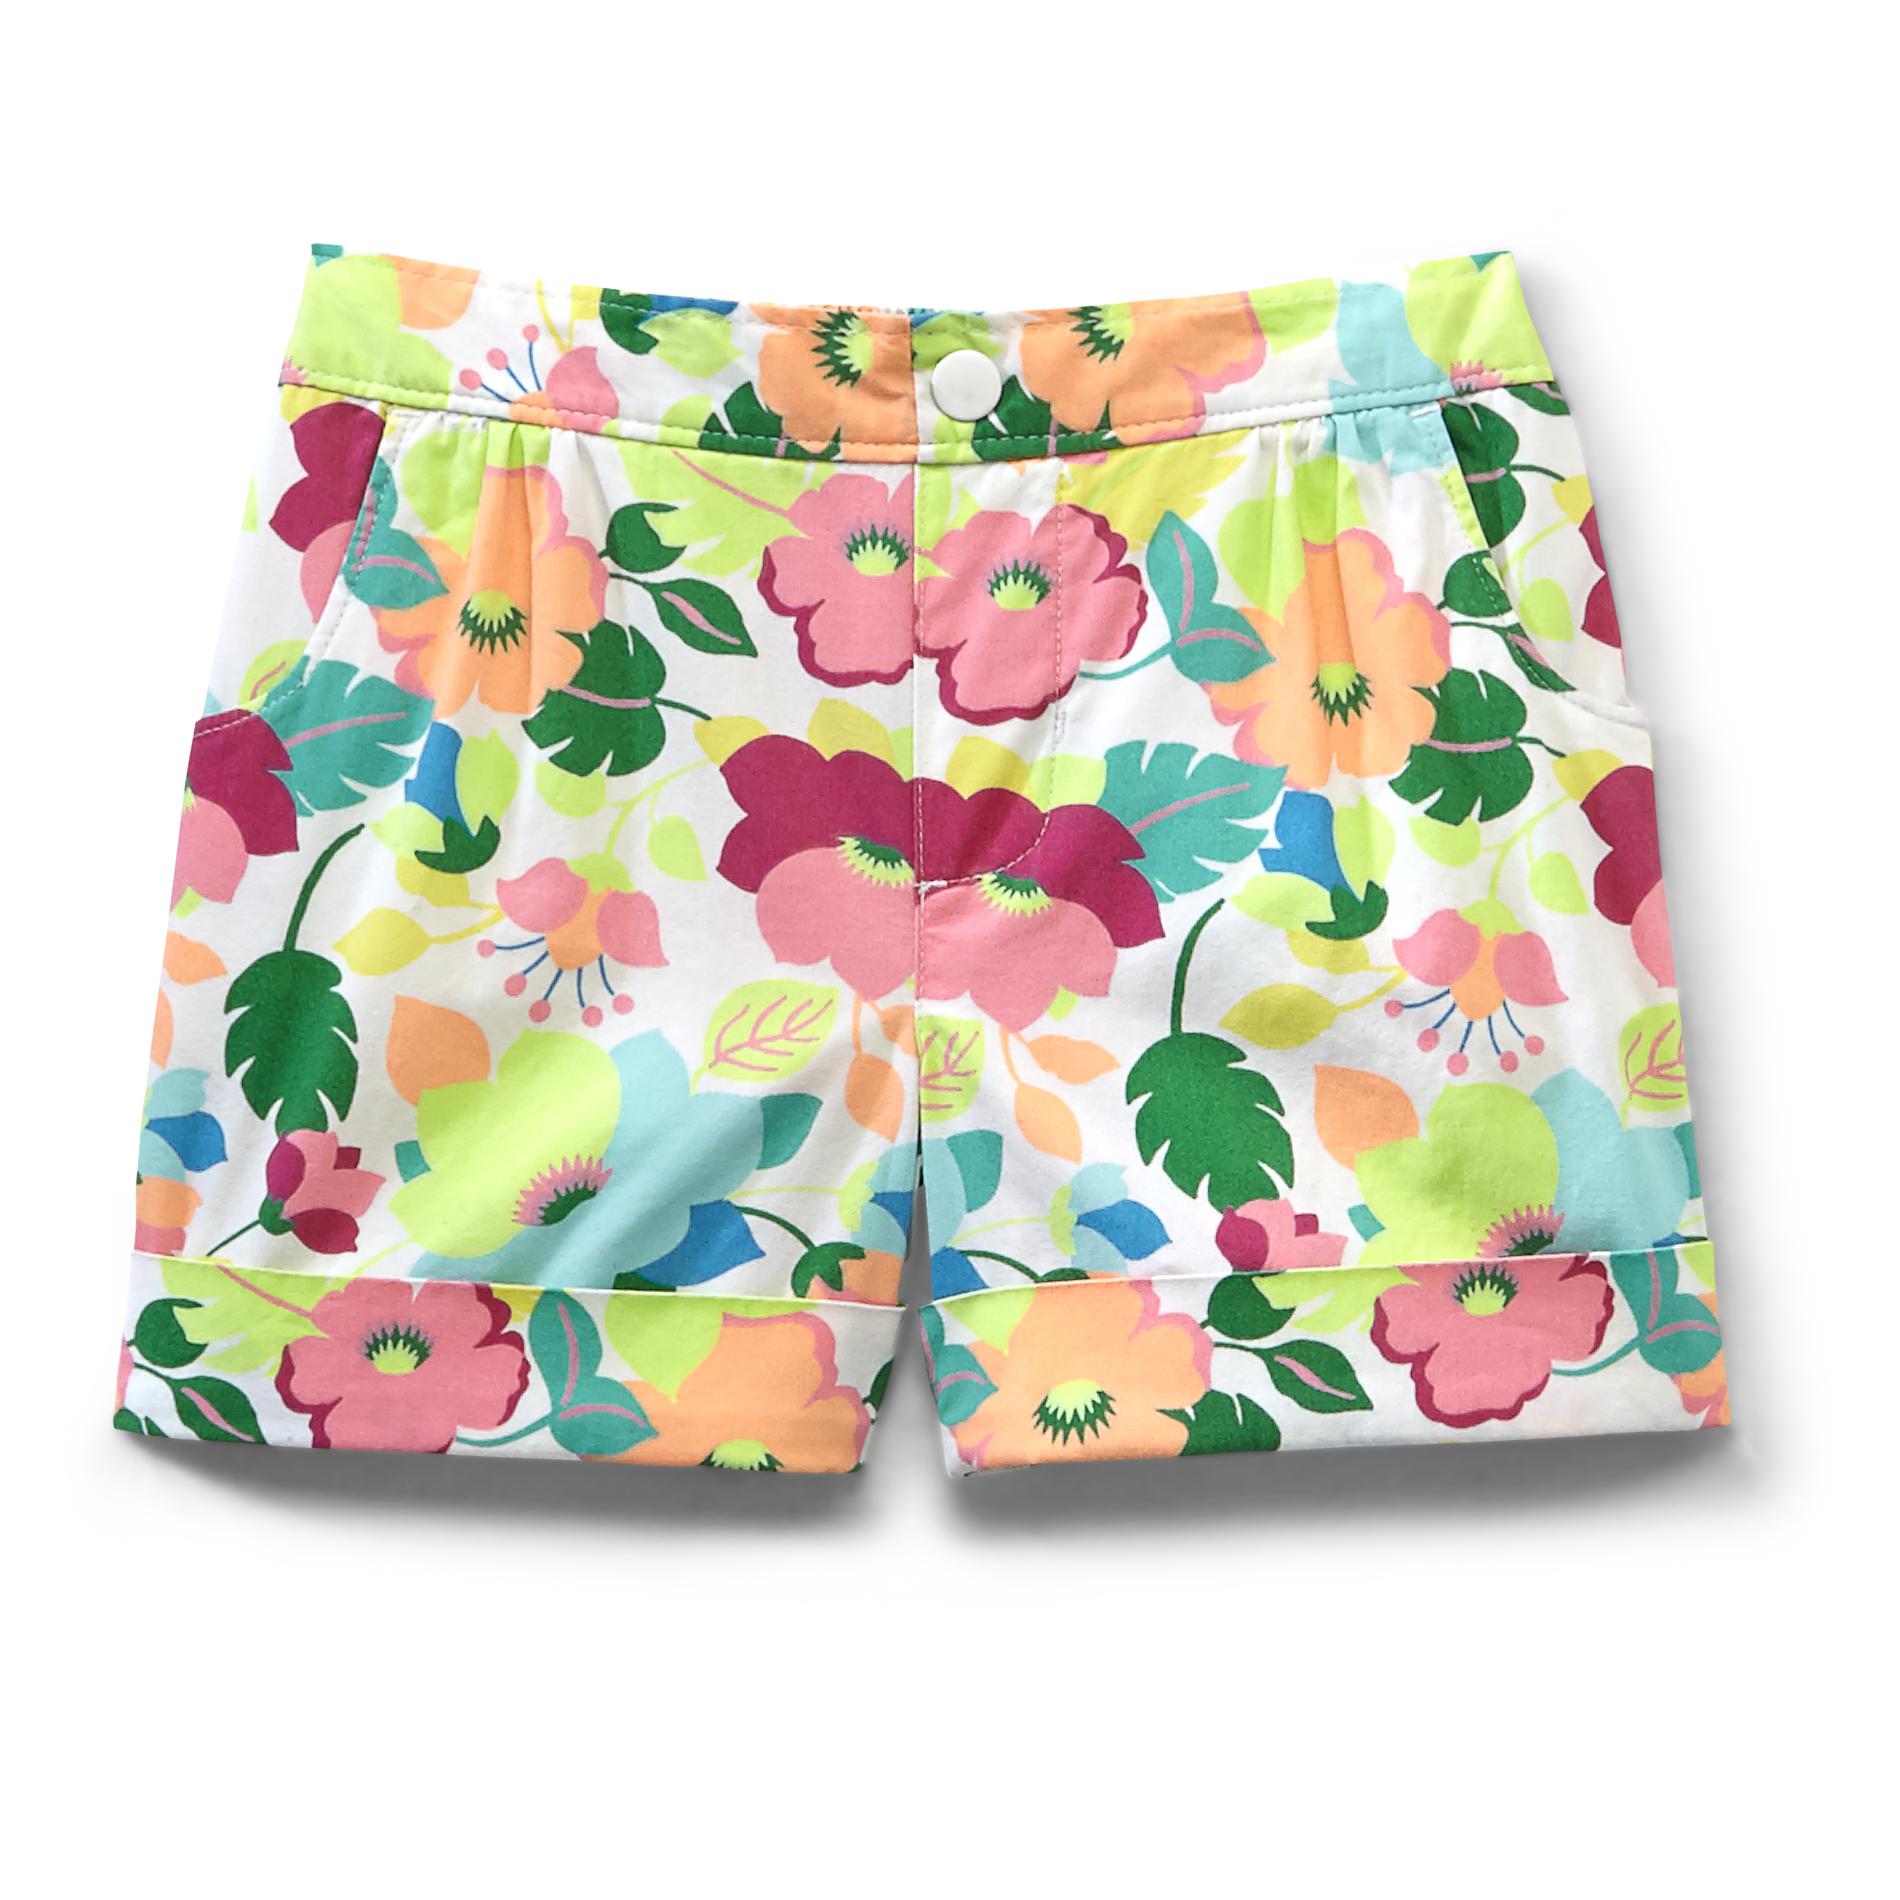 Toughskins Girl's Cuffed Poplin Shorts - Floral